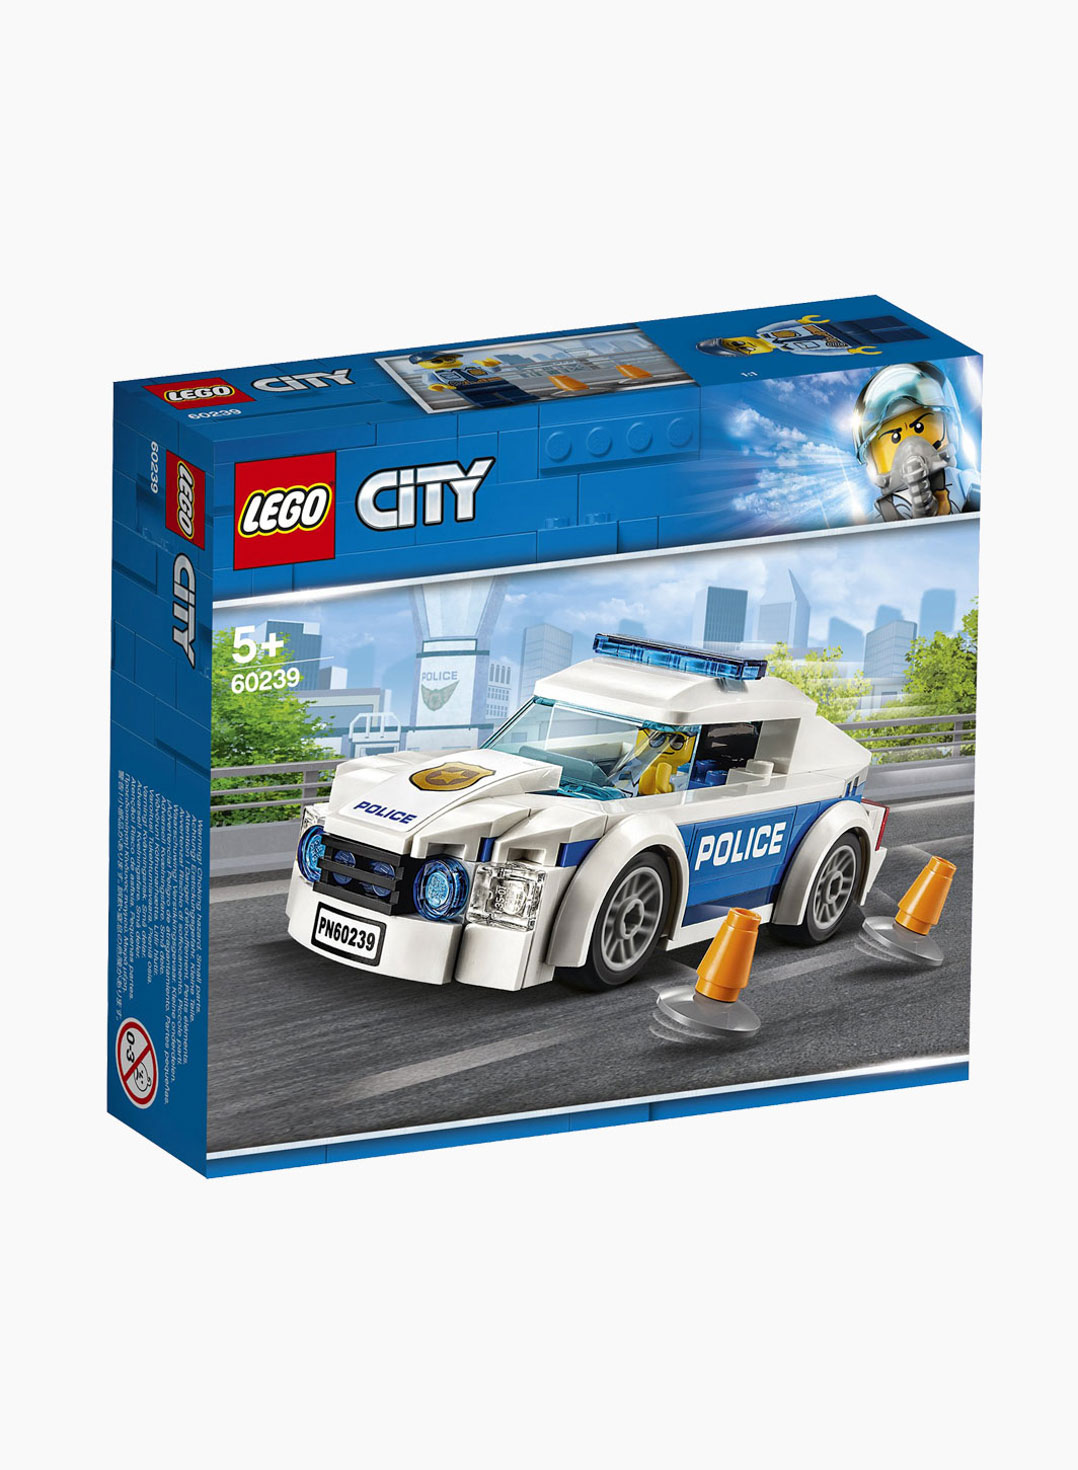 Lego City Constructor Police Patrol Car